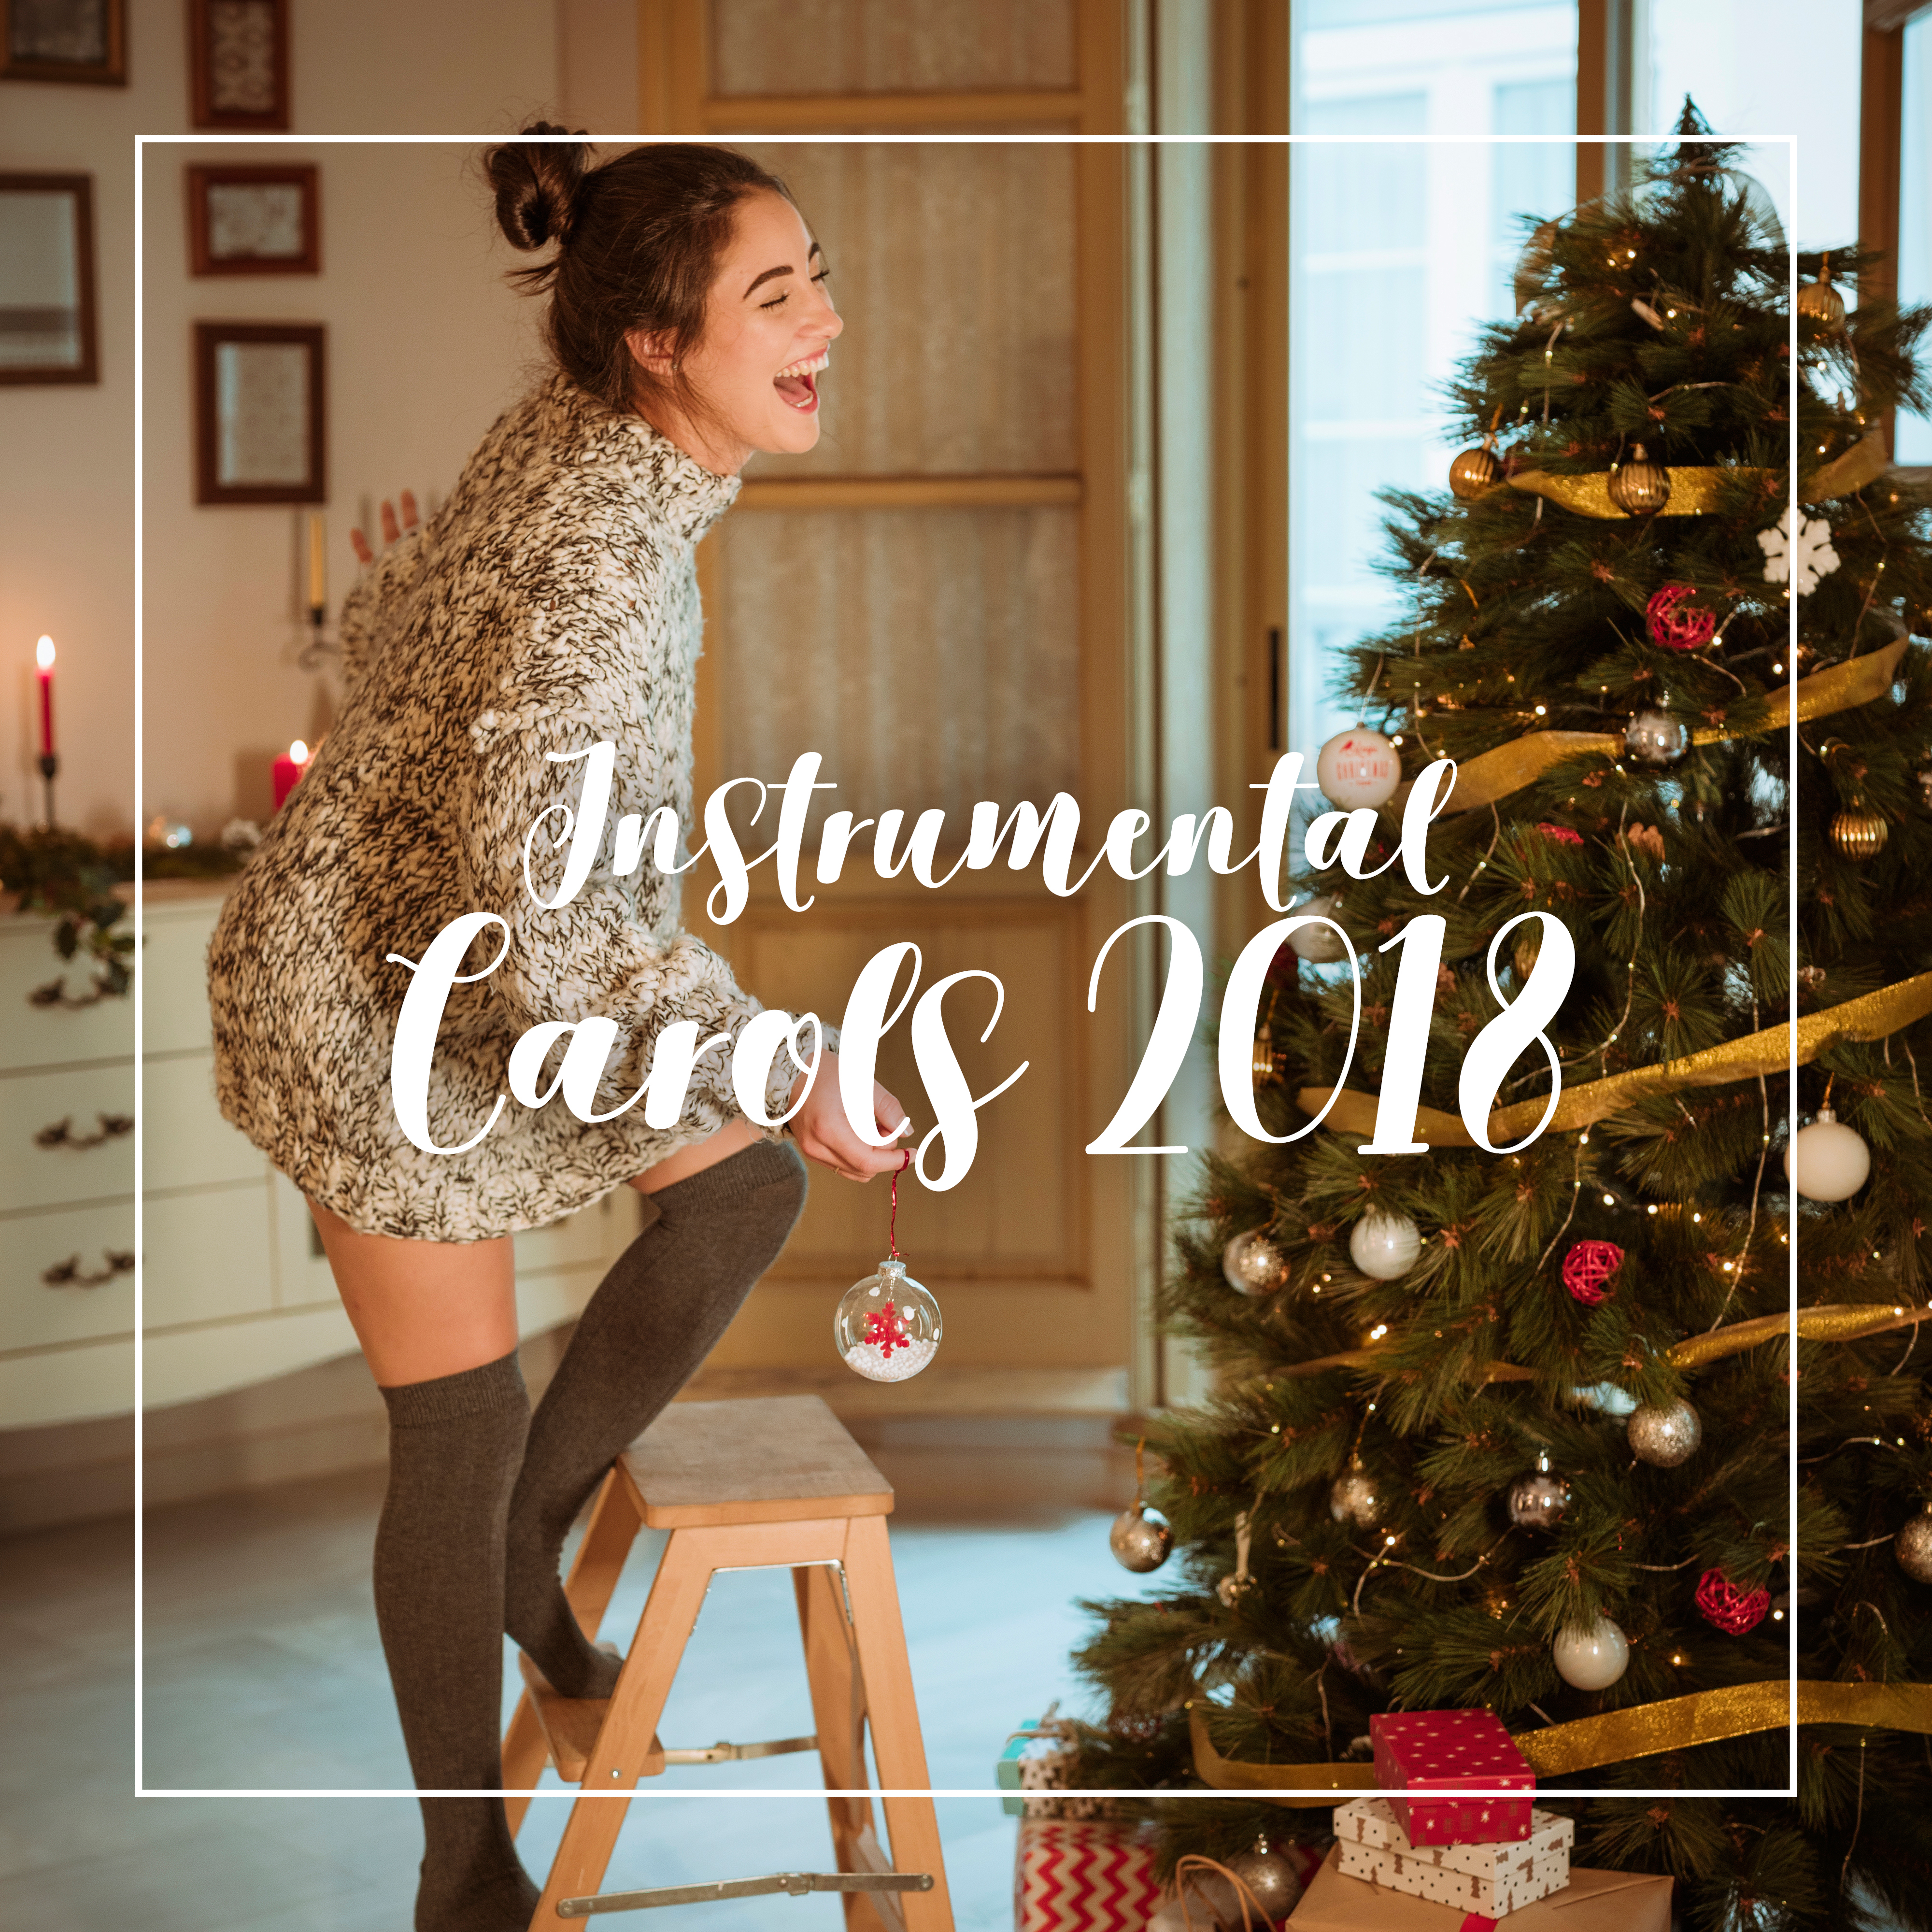 Instrumental Carols 2018